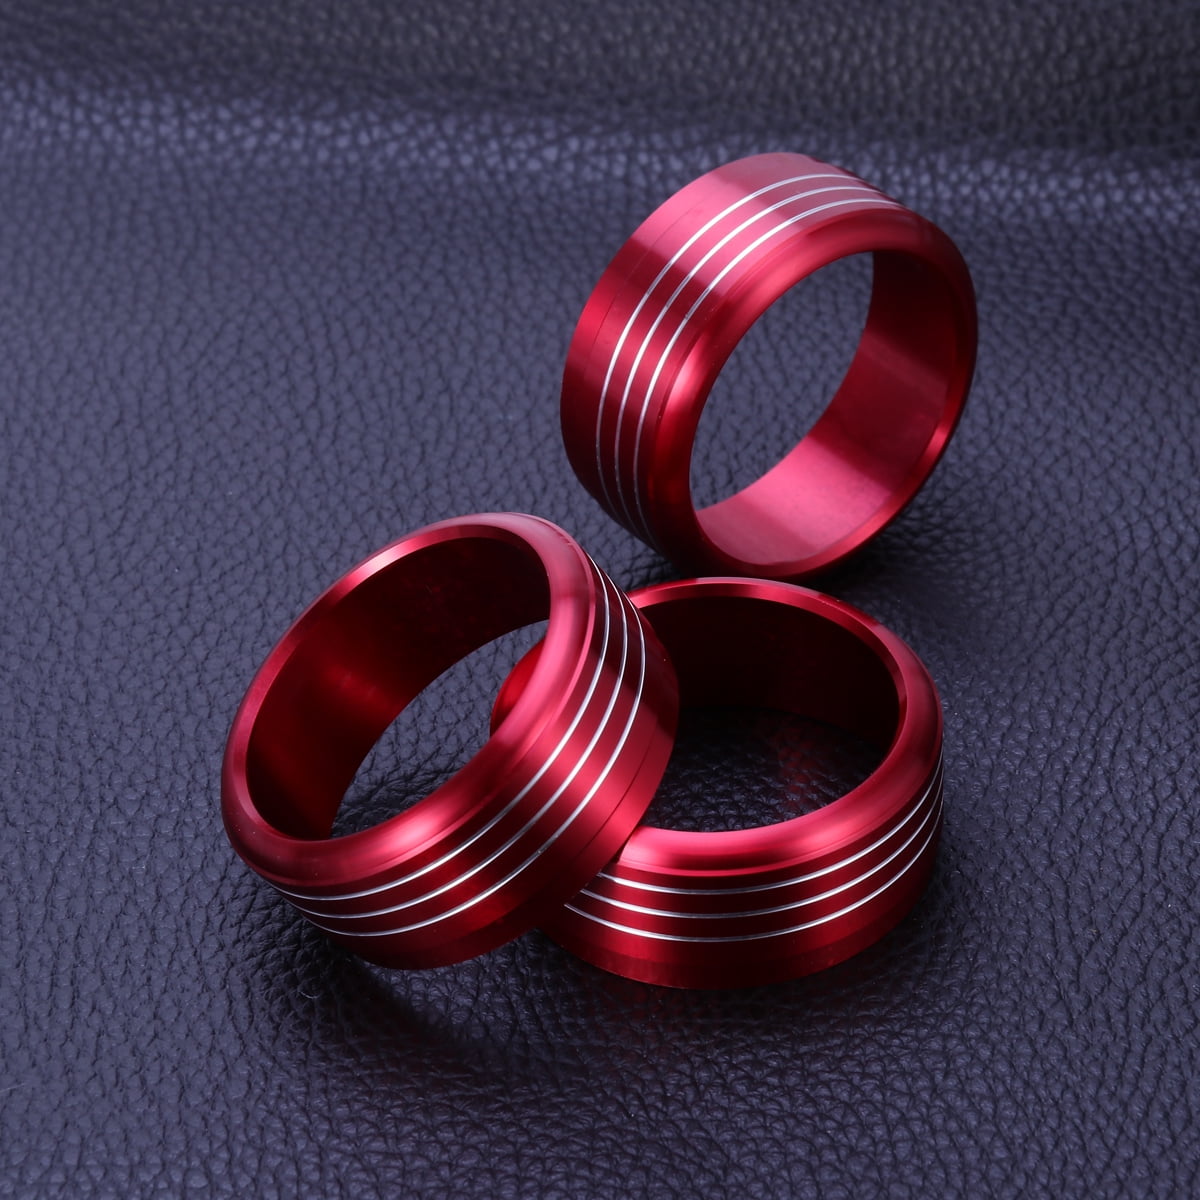 3pcs Aluminum Red AC Climate Control Knob Ring Covers For Subaru Impreza WRX/STi